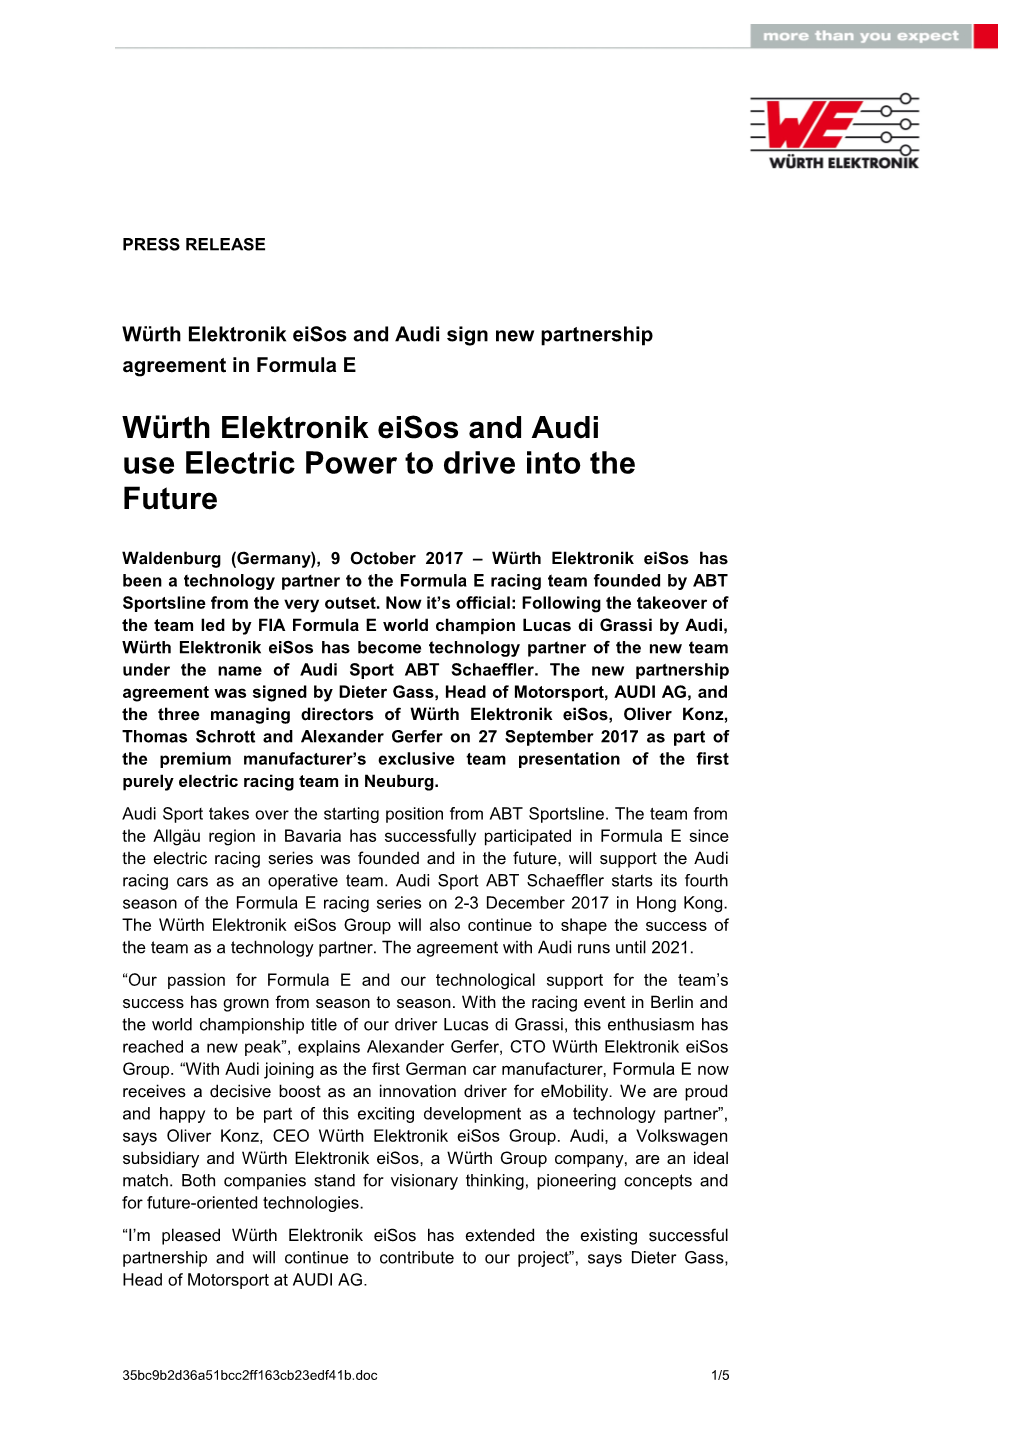 Würth Elektronik Eisos and Audi Sign New Partnership Agreement in Formula E